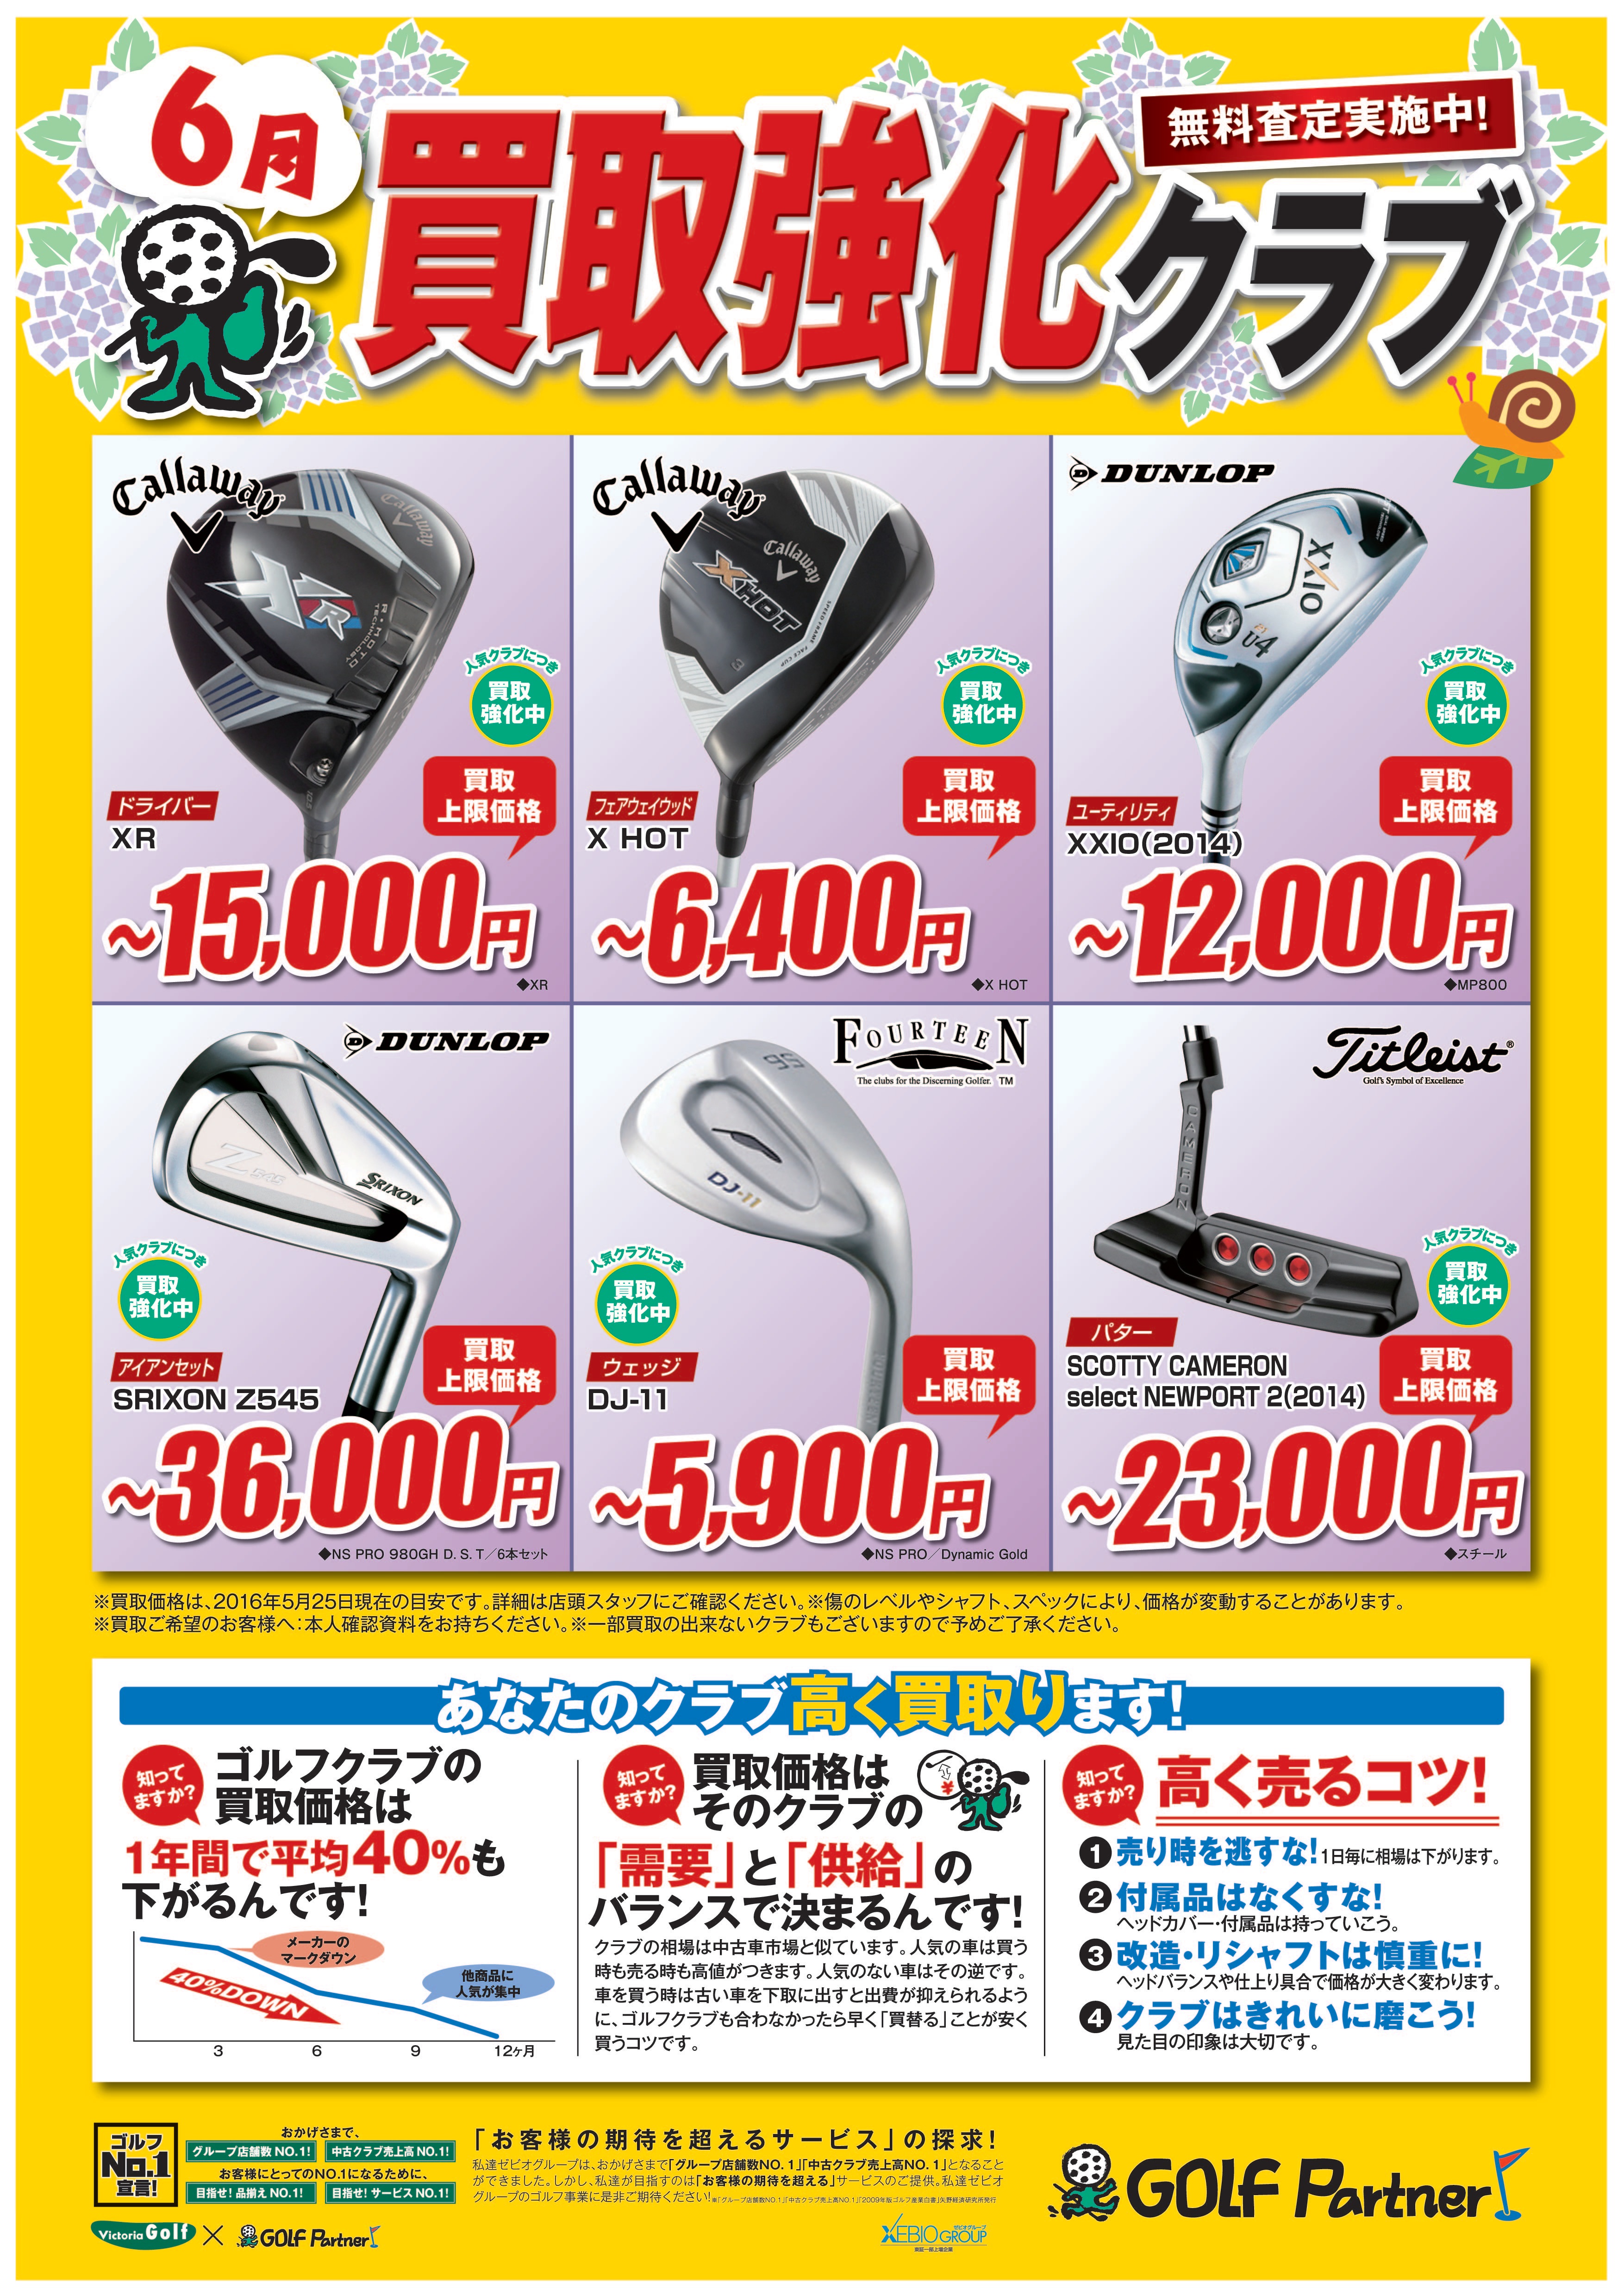 http://www.golfpartner.co.jp/585/1605_6kaitori_A3_GP%20%281%29.jpg